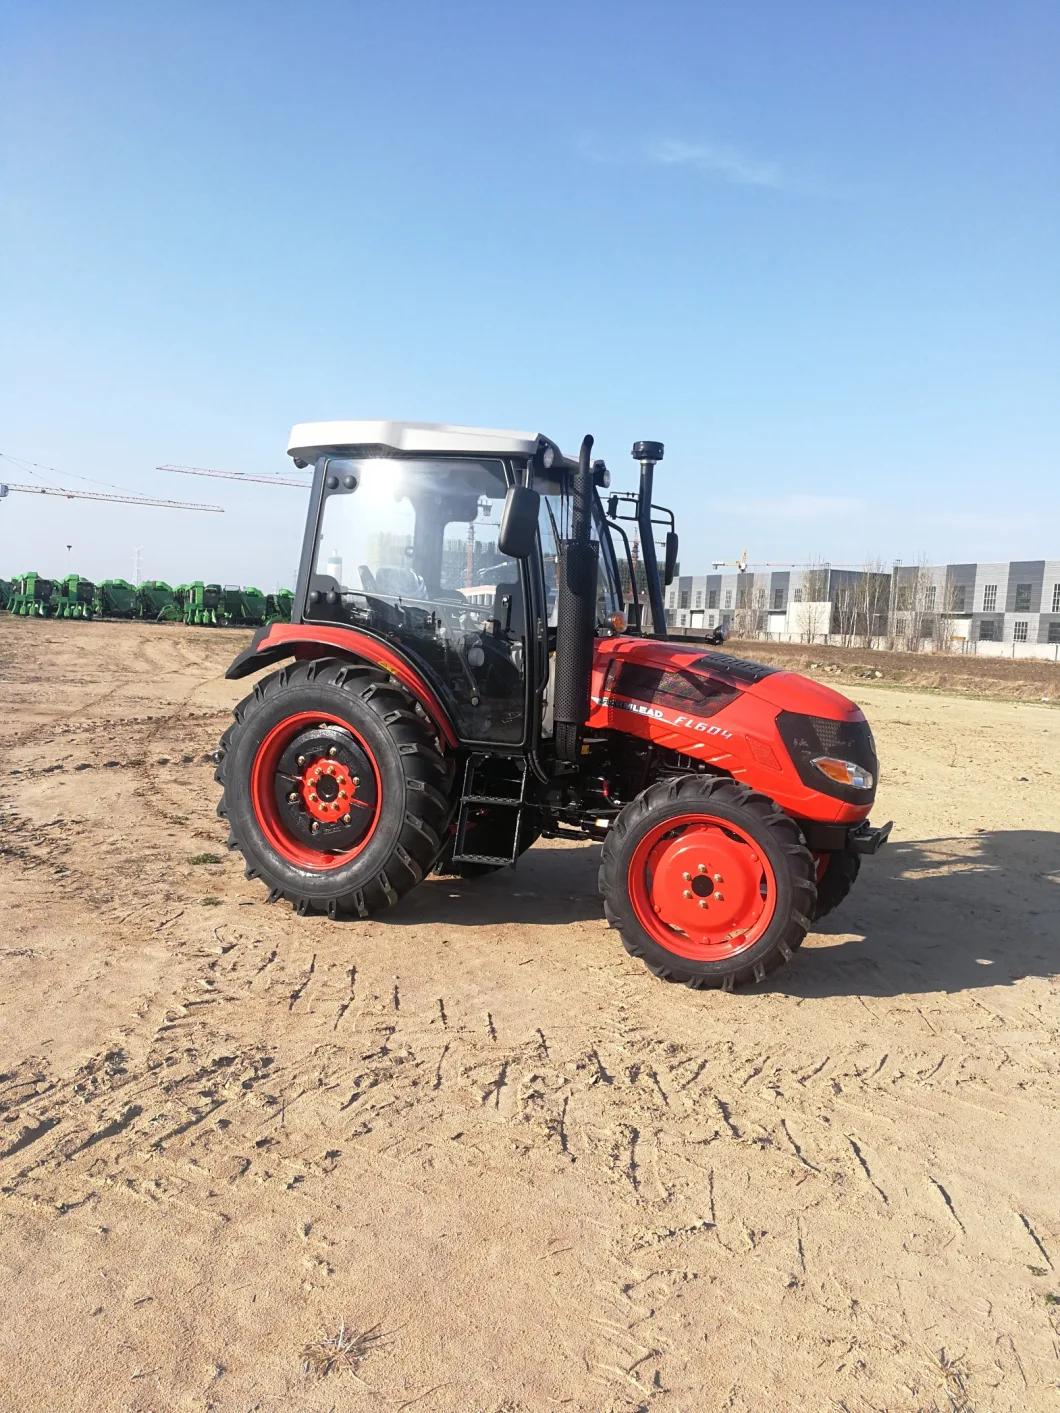 Sdf Chinese Factory Produced Farmlead, Hanomag, Matador Farm Tractors